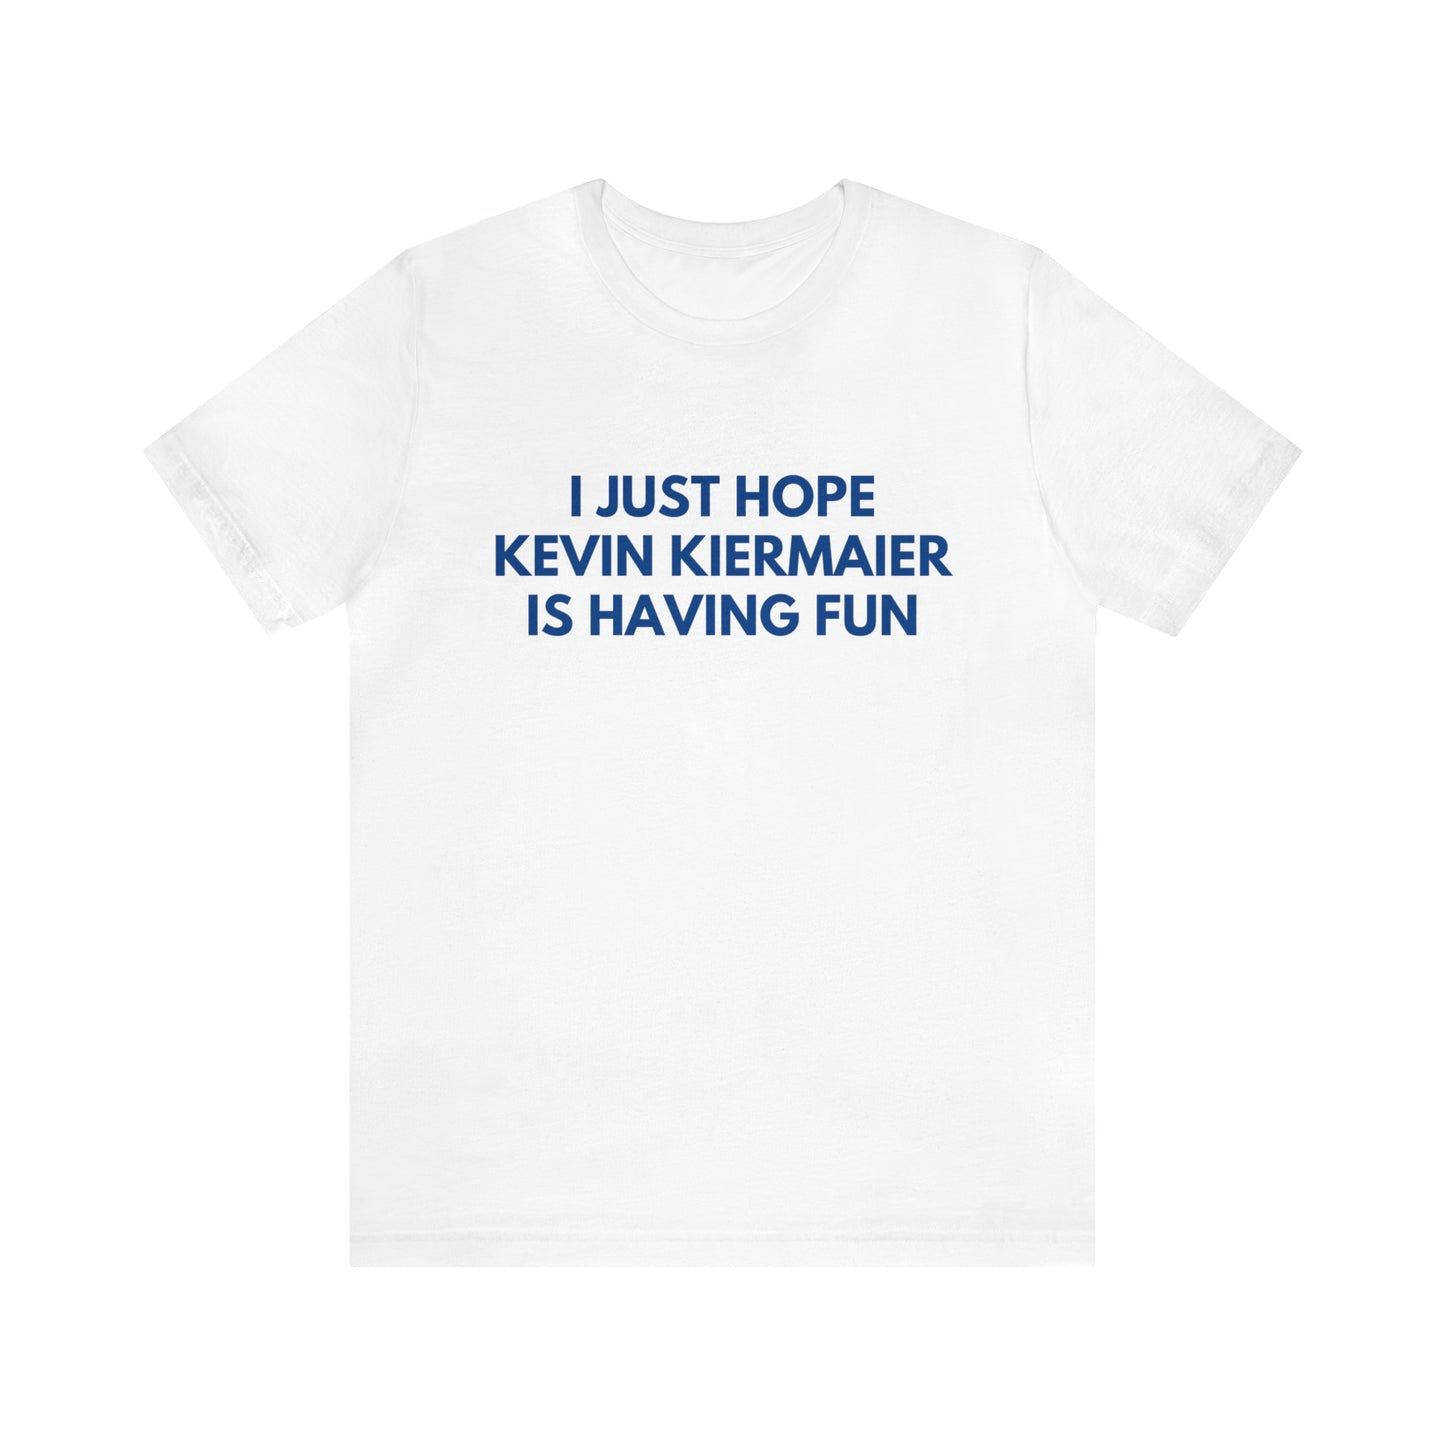 Kevin Kiermaier Having Fun - Unisex T-shirt